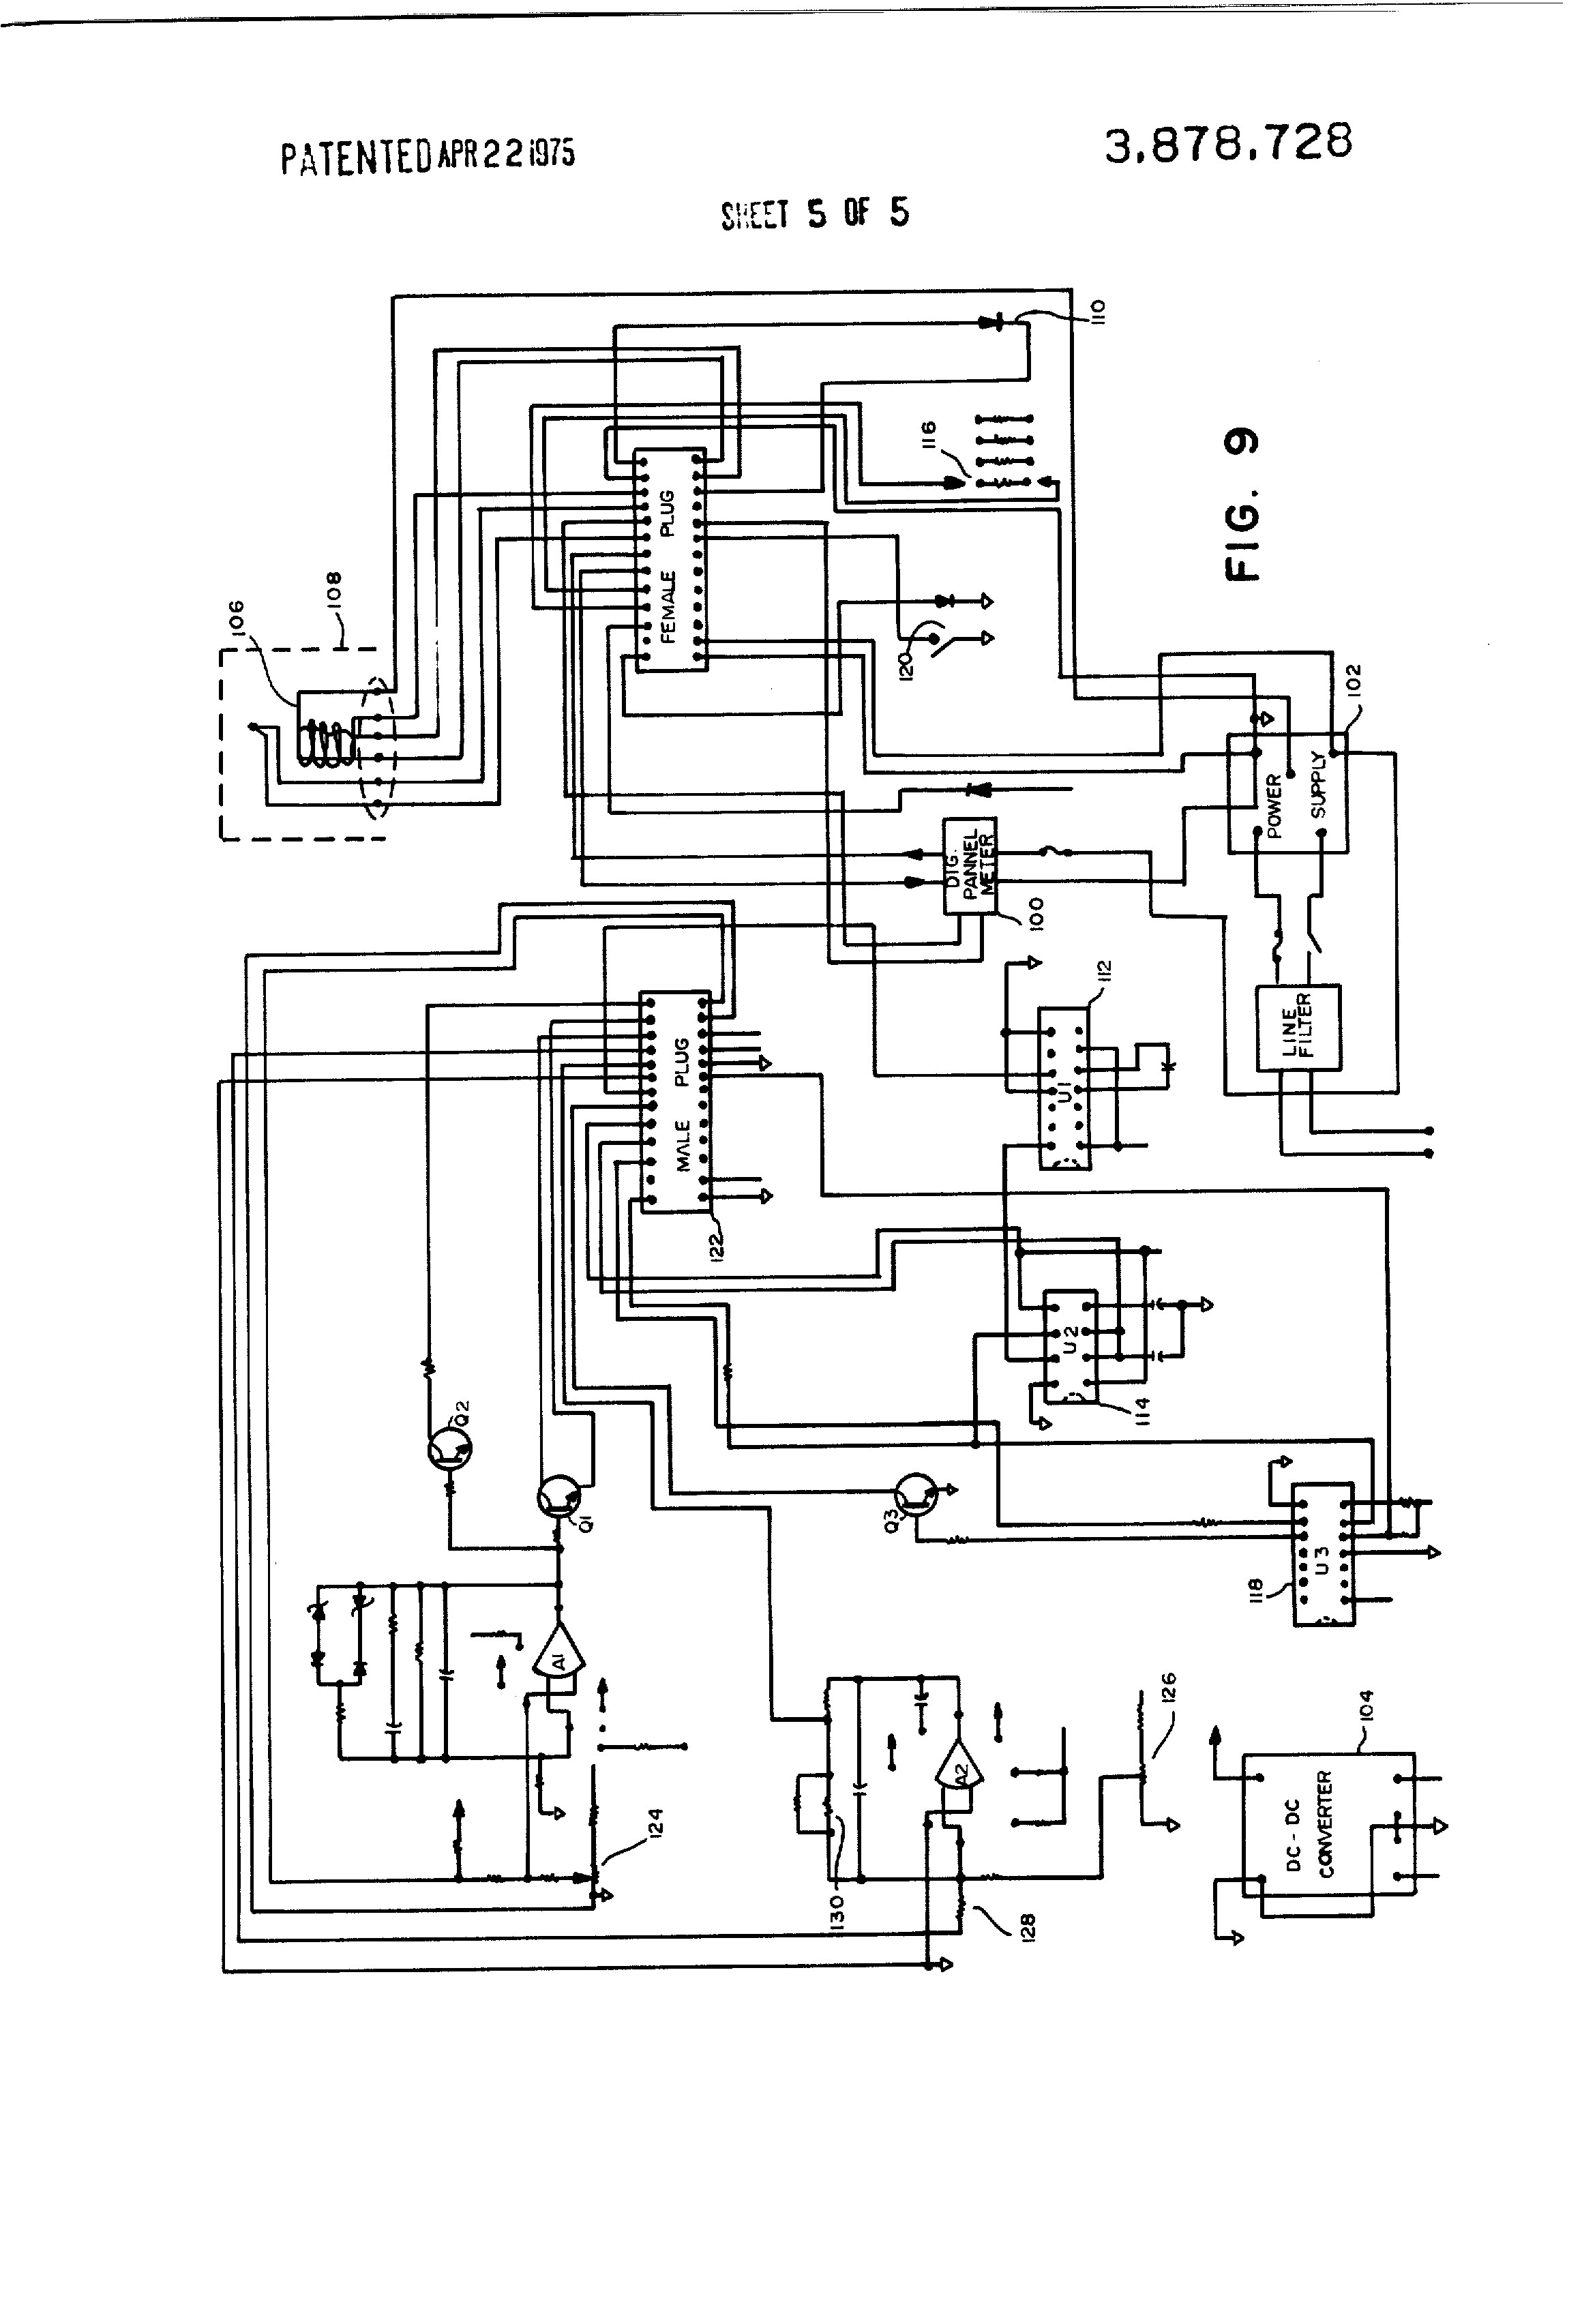 Jlg Scissor Lift Wiring Diagram Lift Electrical Wiring Diagram Of Jlg Scissor Lift Wiring Diagram